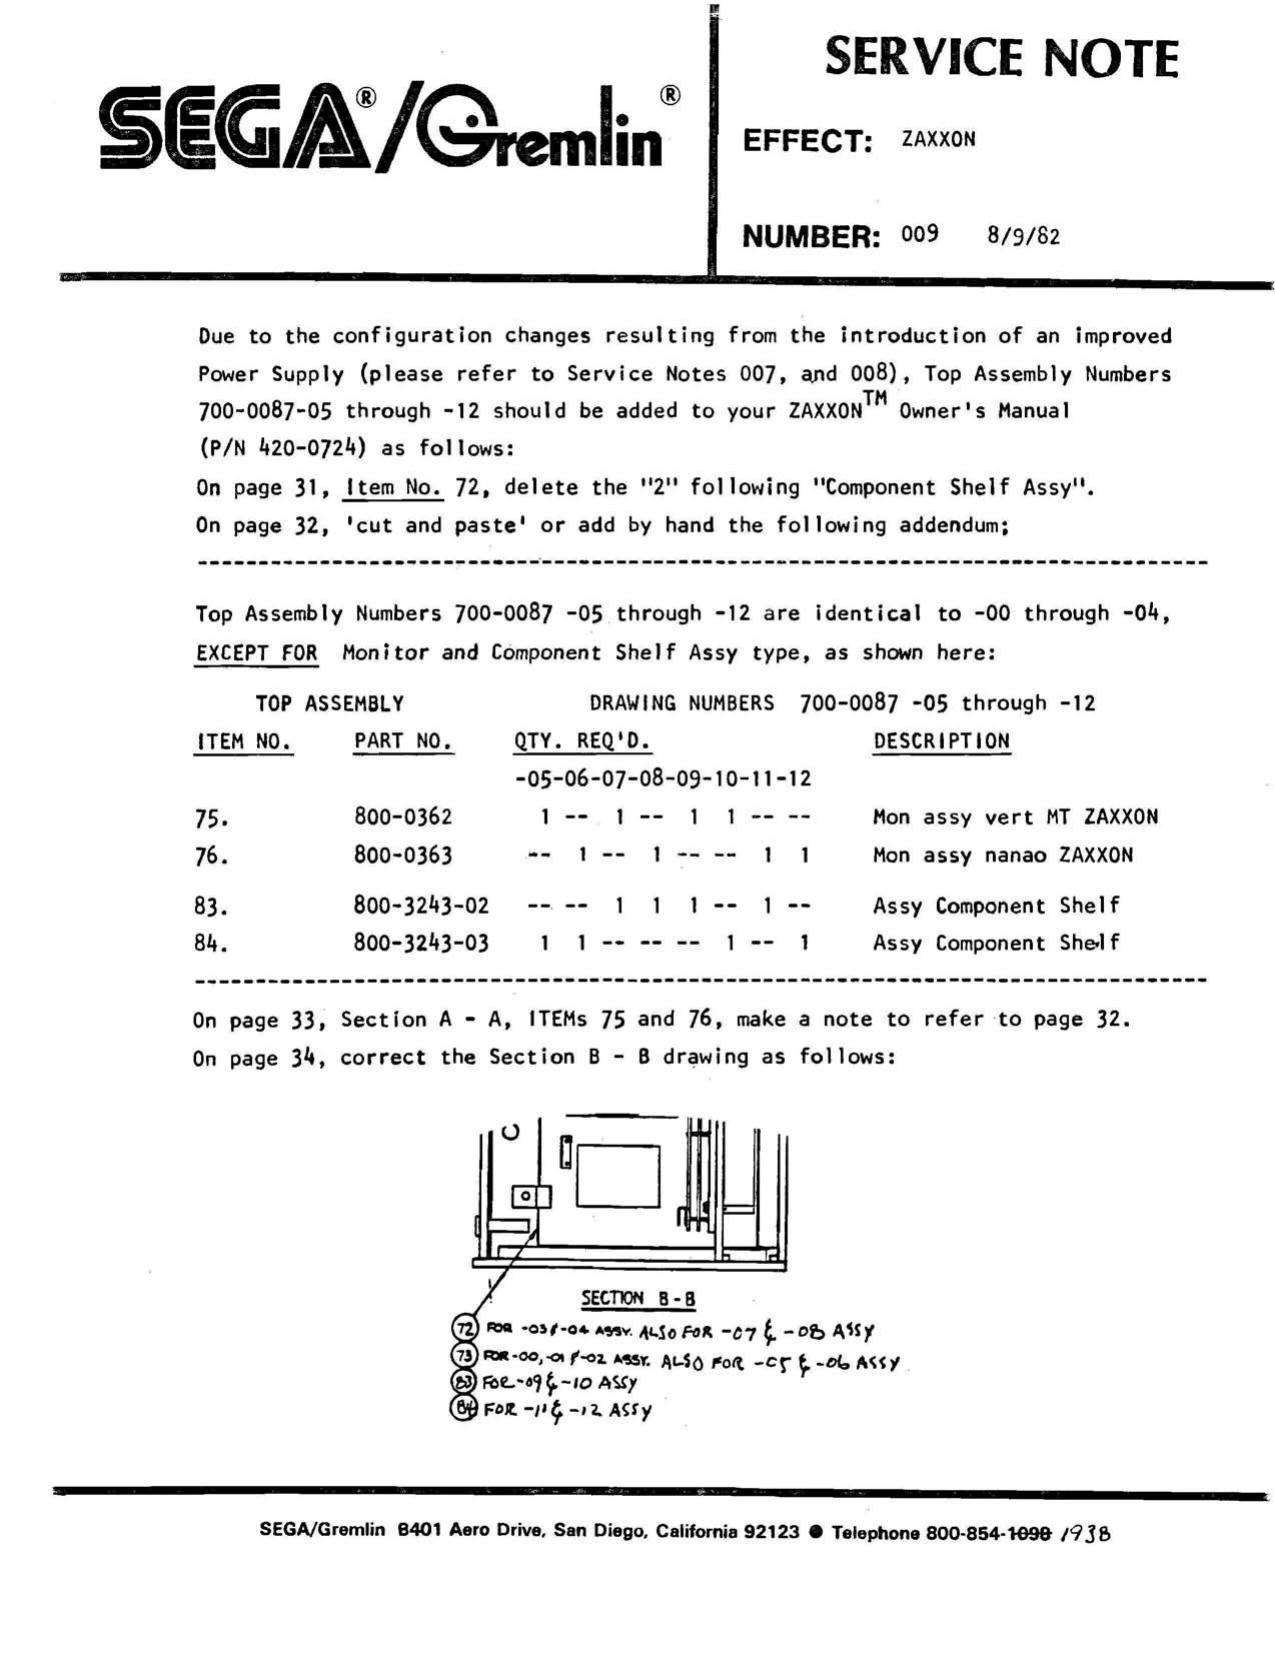 Zaxxon Service Note 009 (08-09-1982)